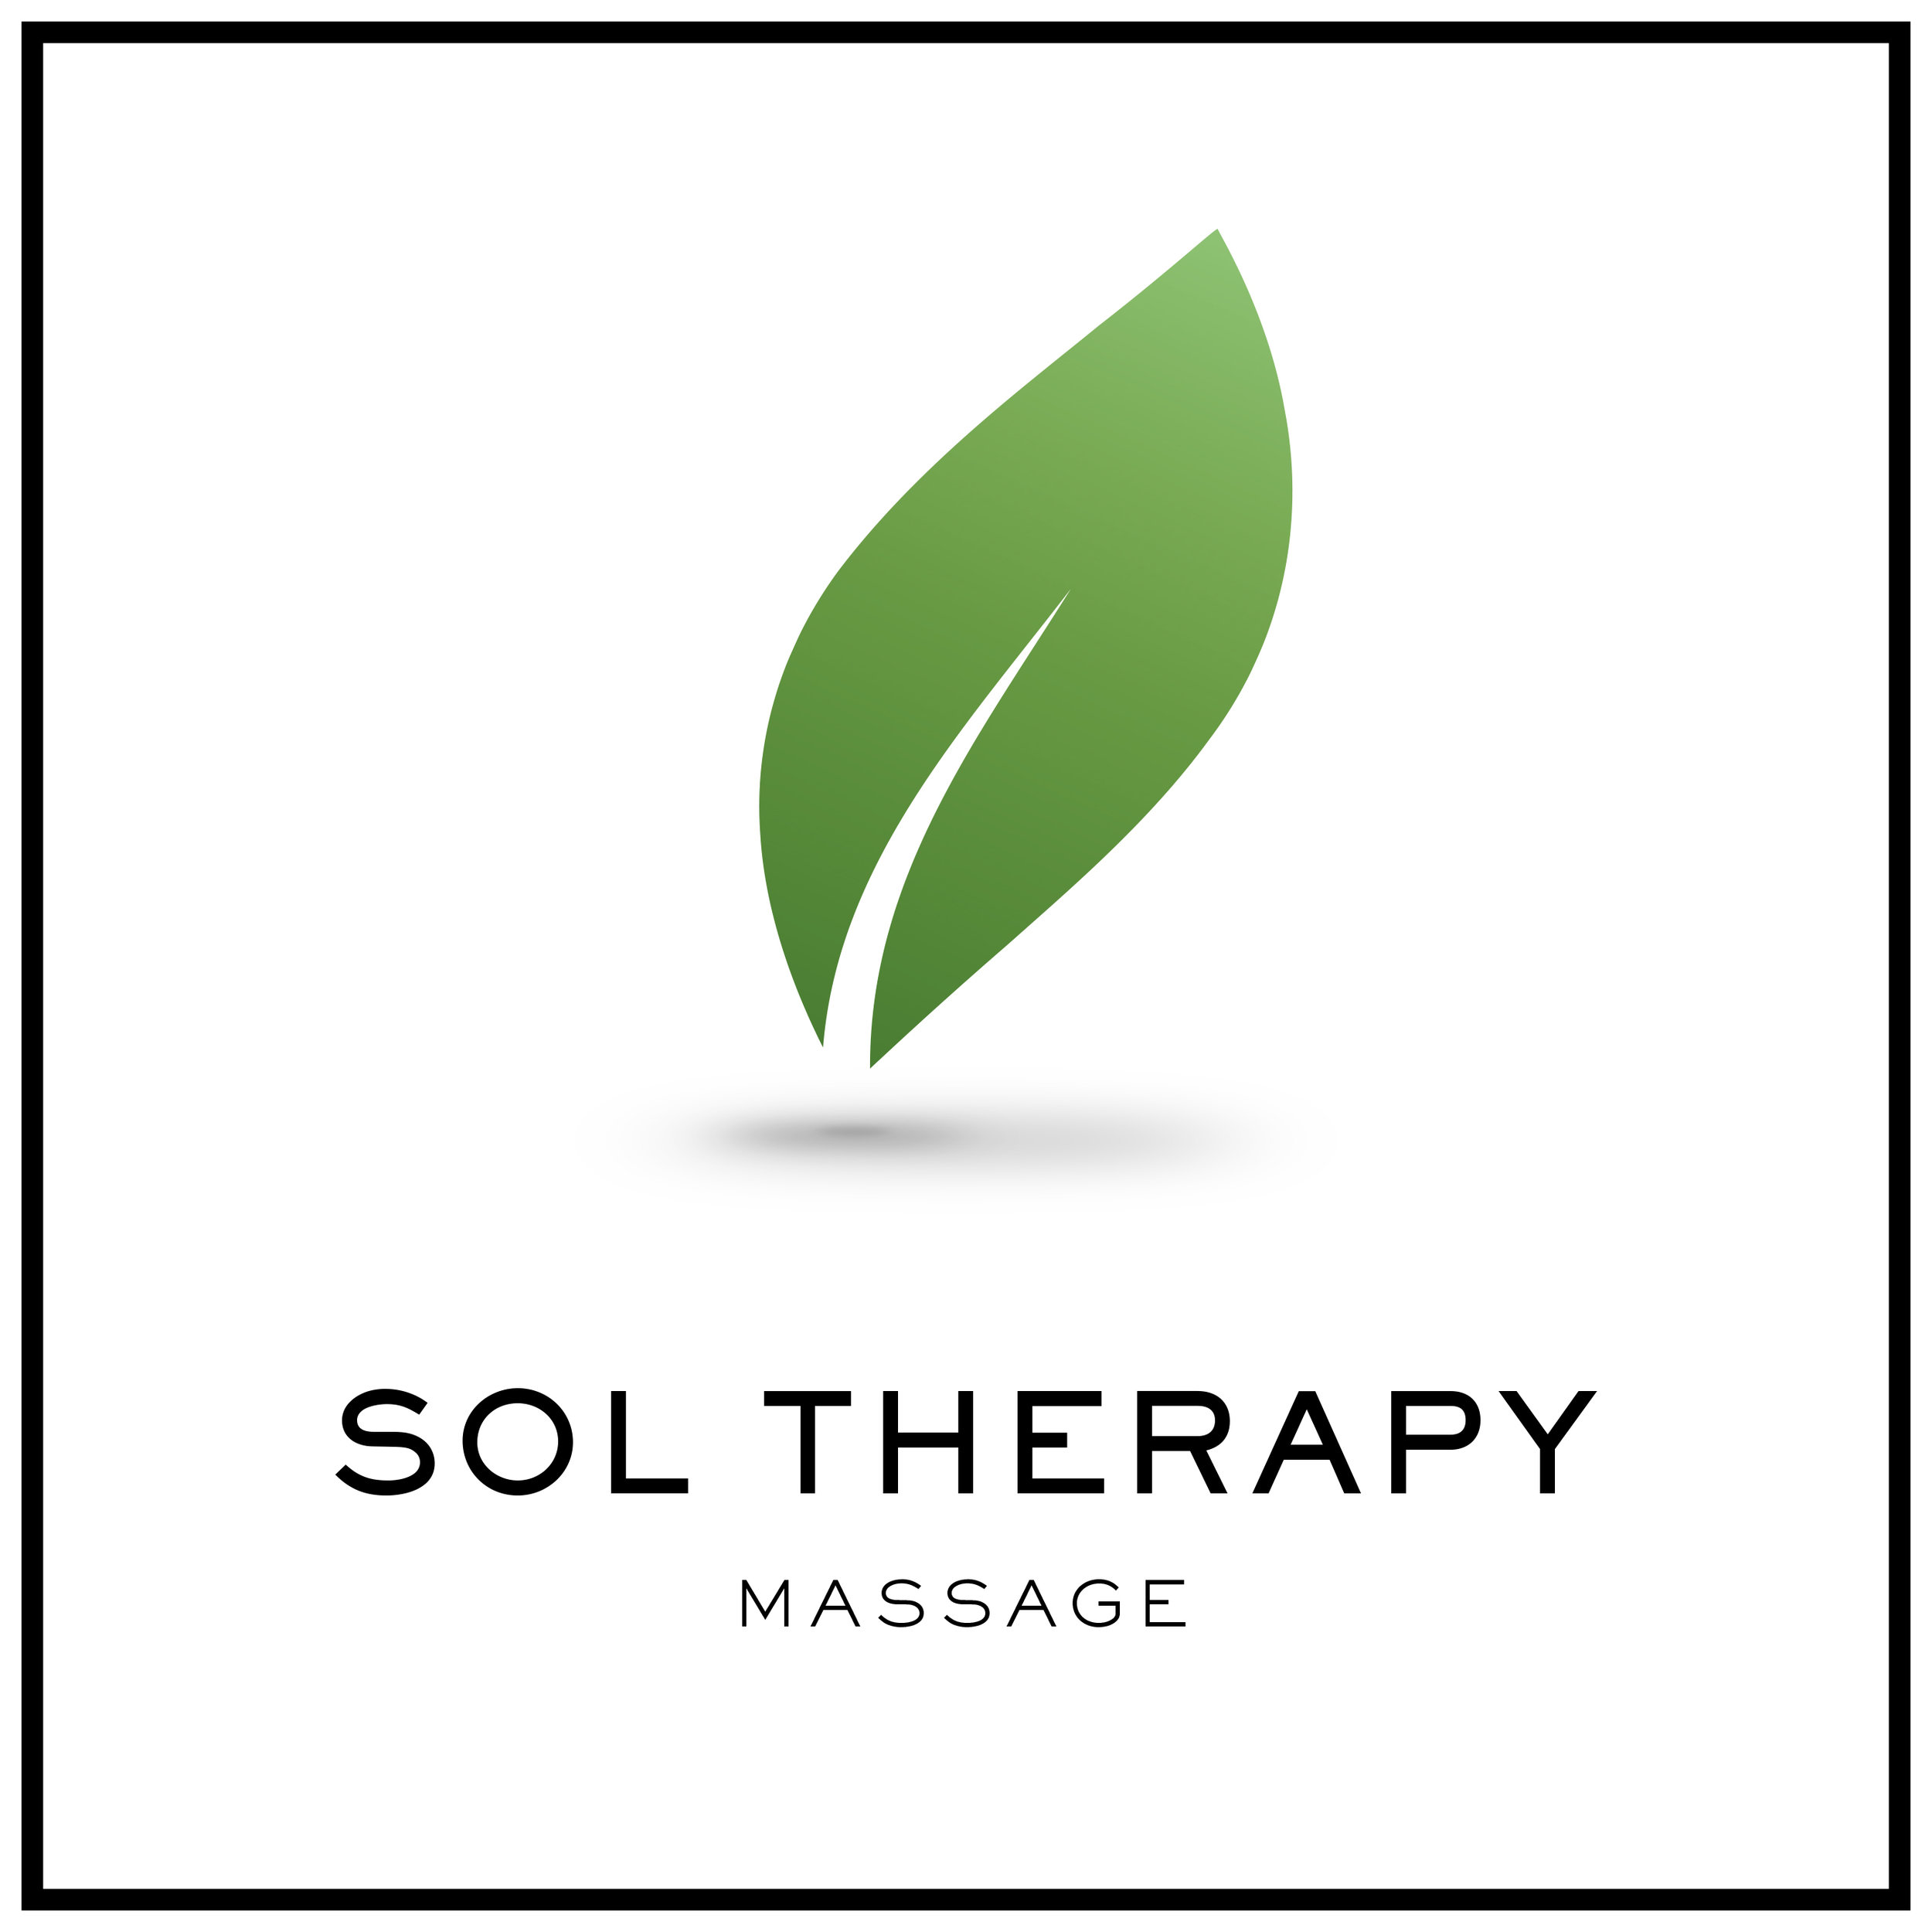 Sol Therapy [v3] Mobile Massage PS by Graham Hnedak Brand G Creative 27 April 2016.jpg